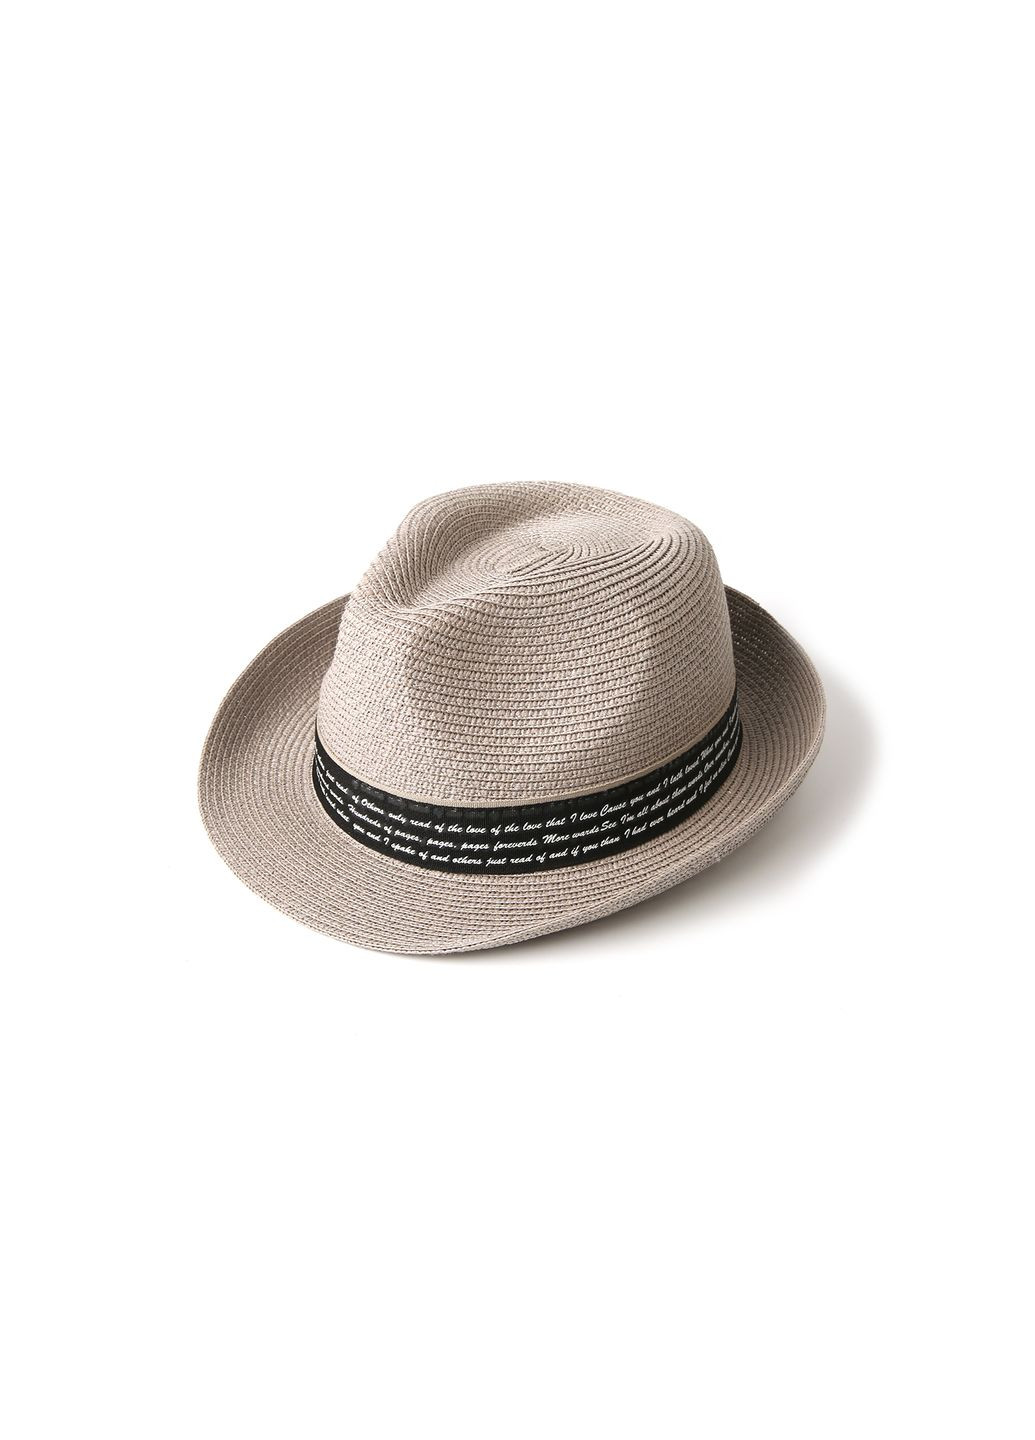 Шляпа трилби мужская бумага серая VALERY 817-709 LuckyLOOK 817-709m (280914068)